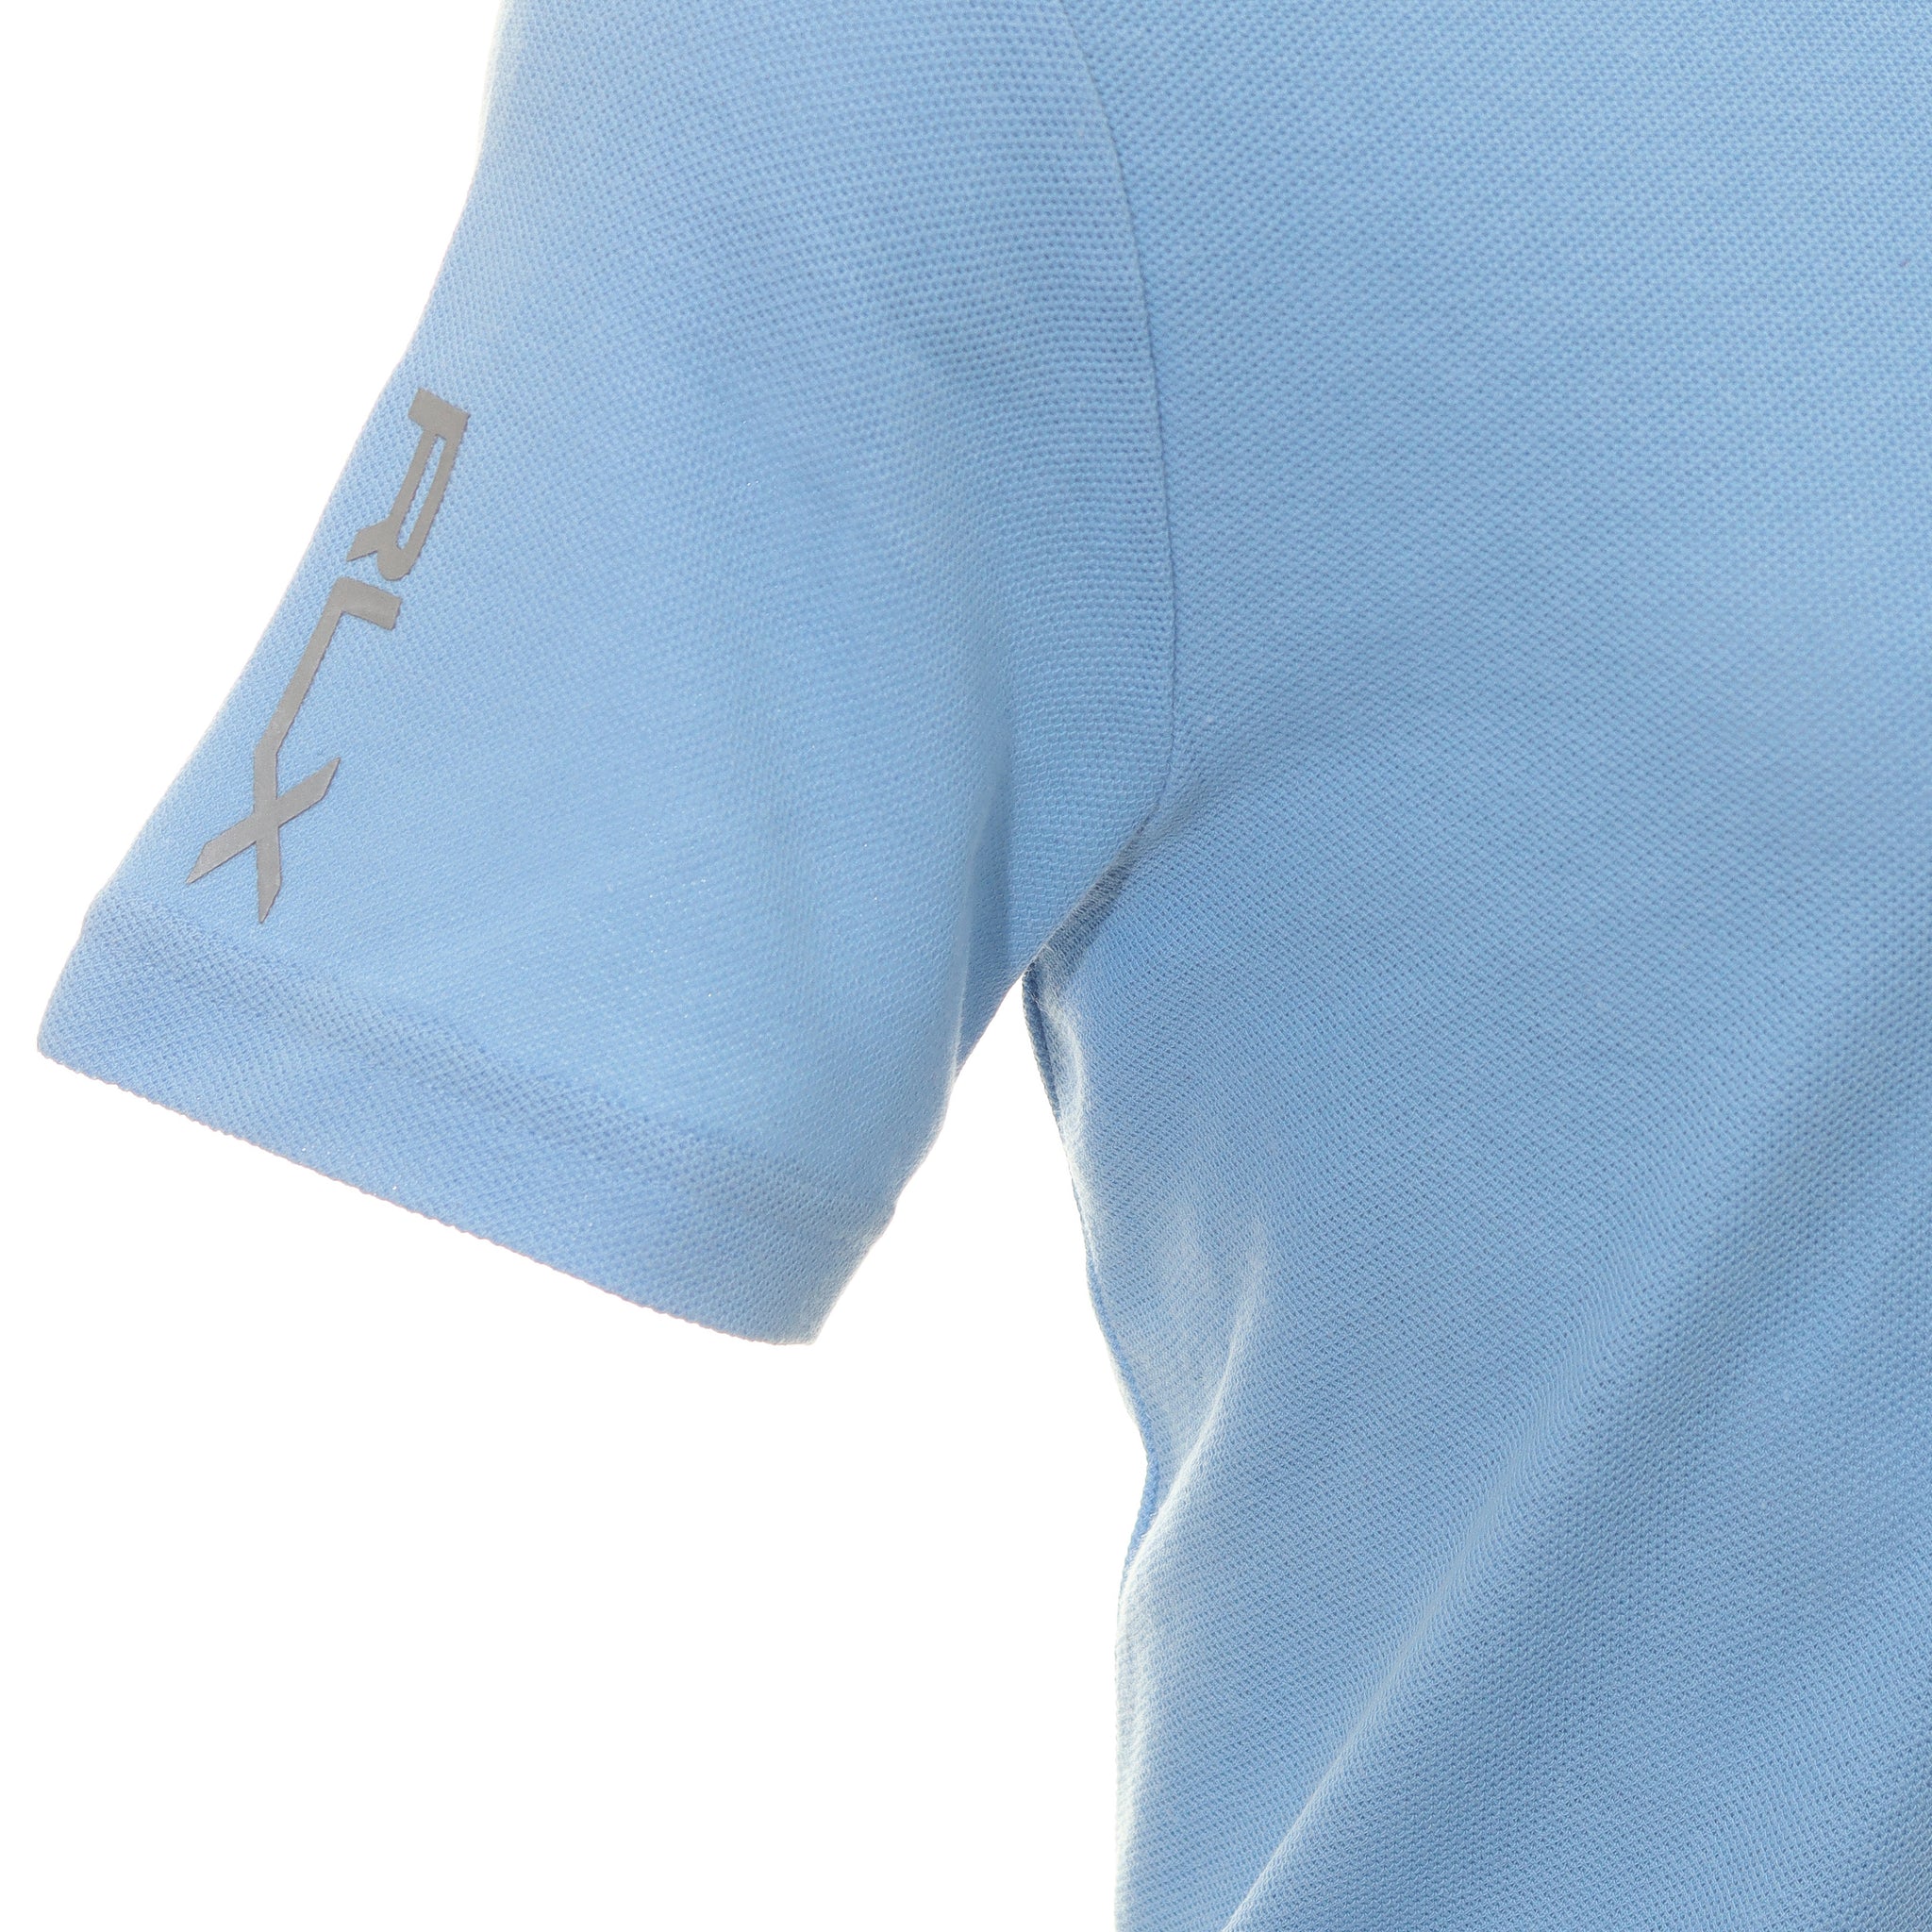 rlx-ralph-lauren-clarus-cotton-polo-shirt-785914487-blue-lagoon-003